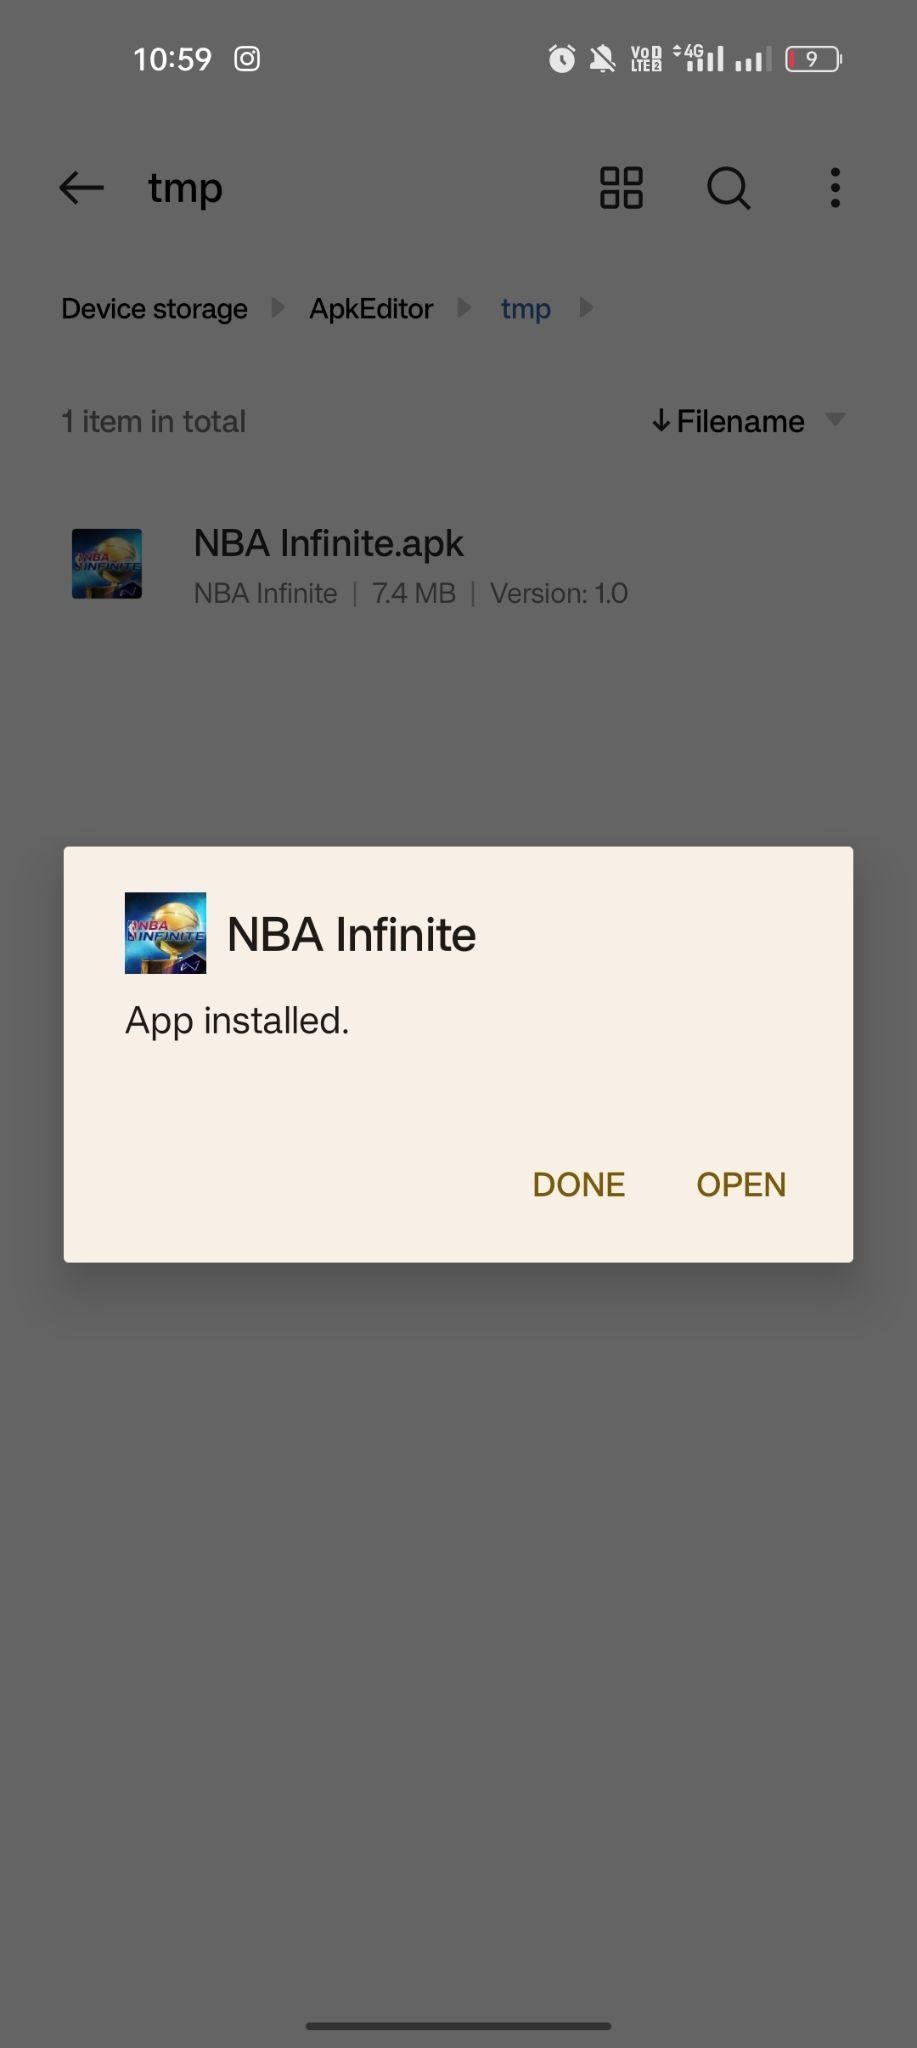 NBA Infinite apk installed